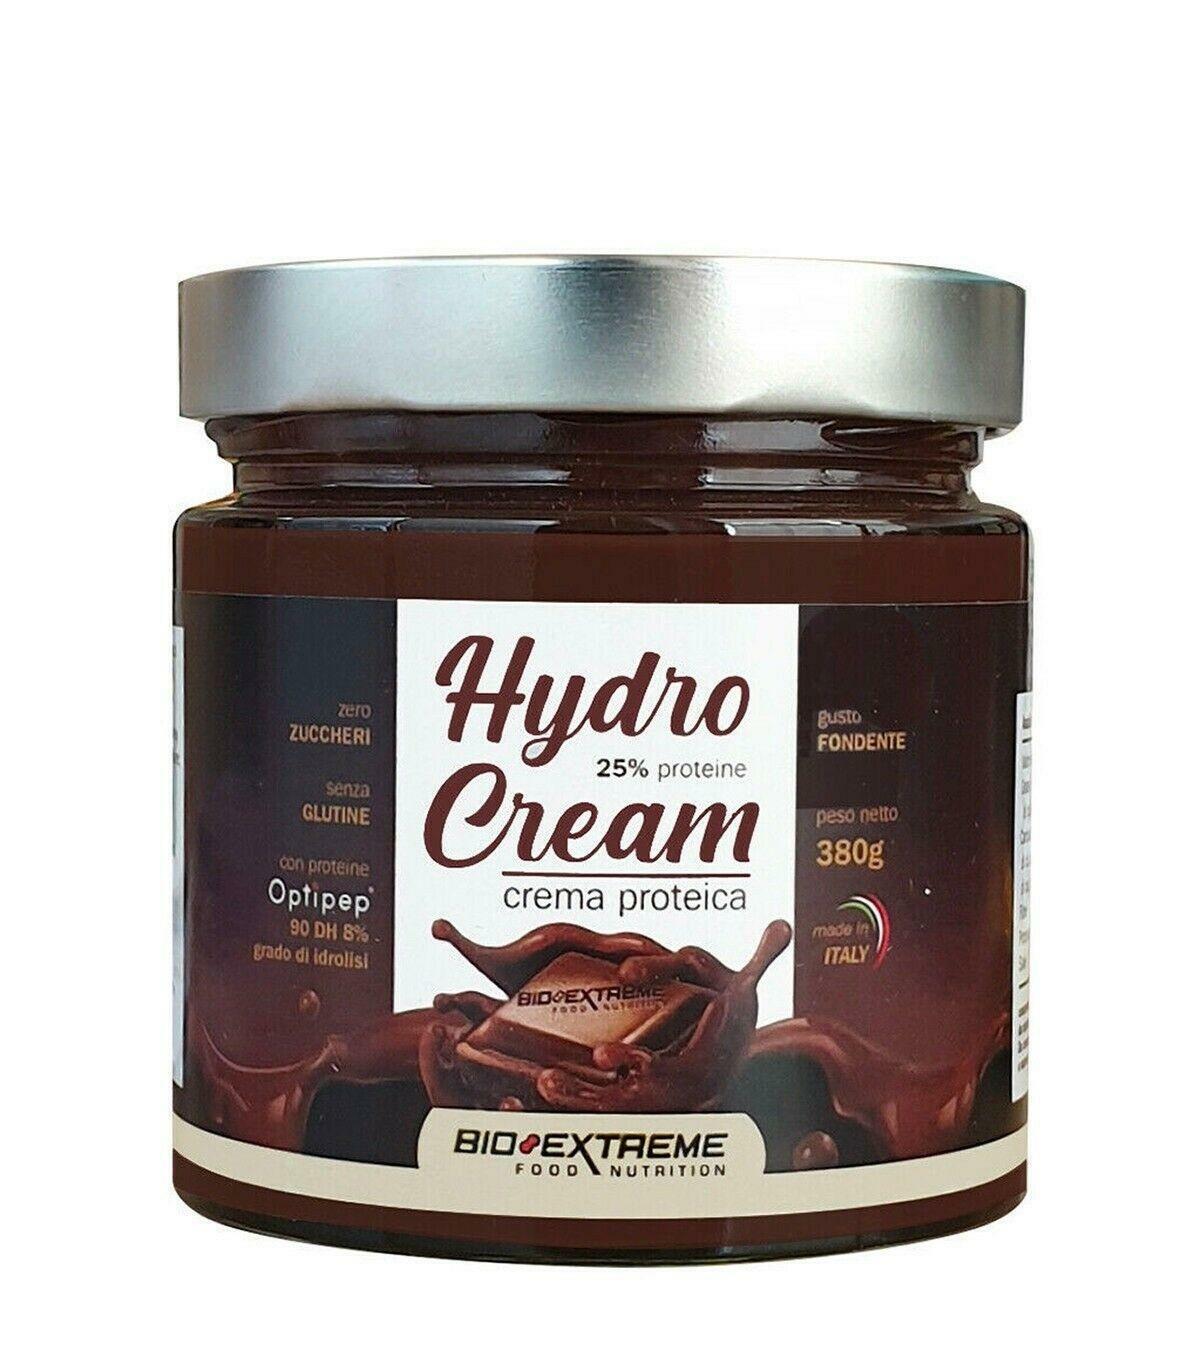 bio extreme bio extreme -  hydro cream crema proteica gusto fondente - 380g